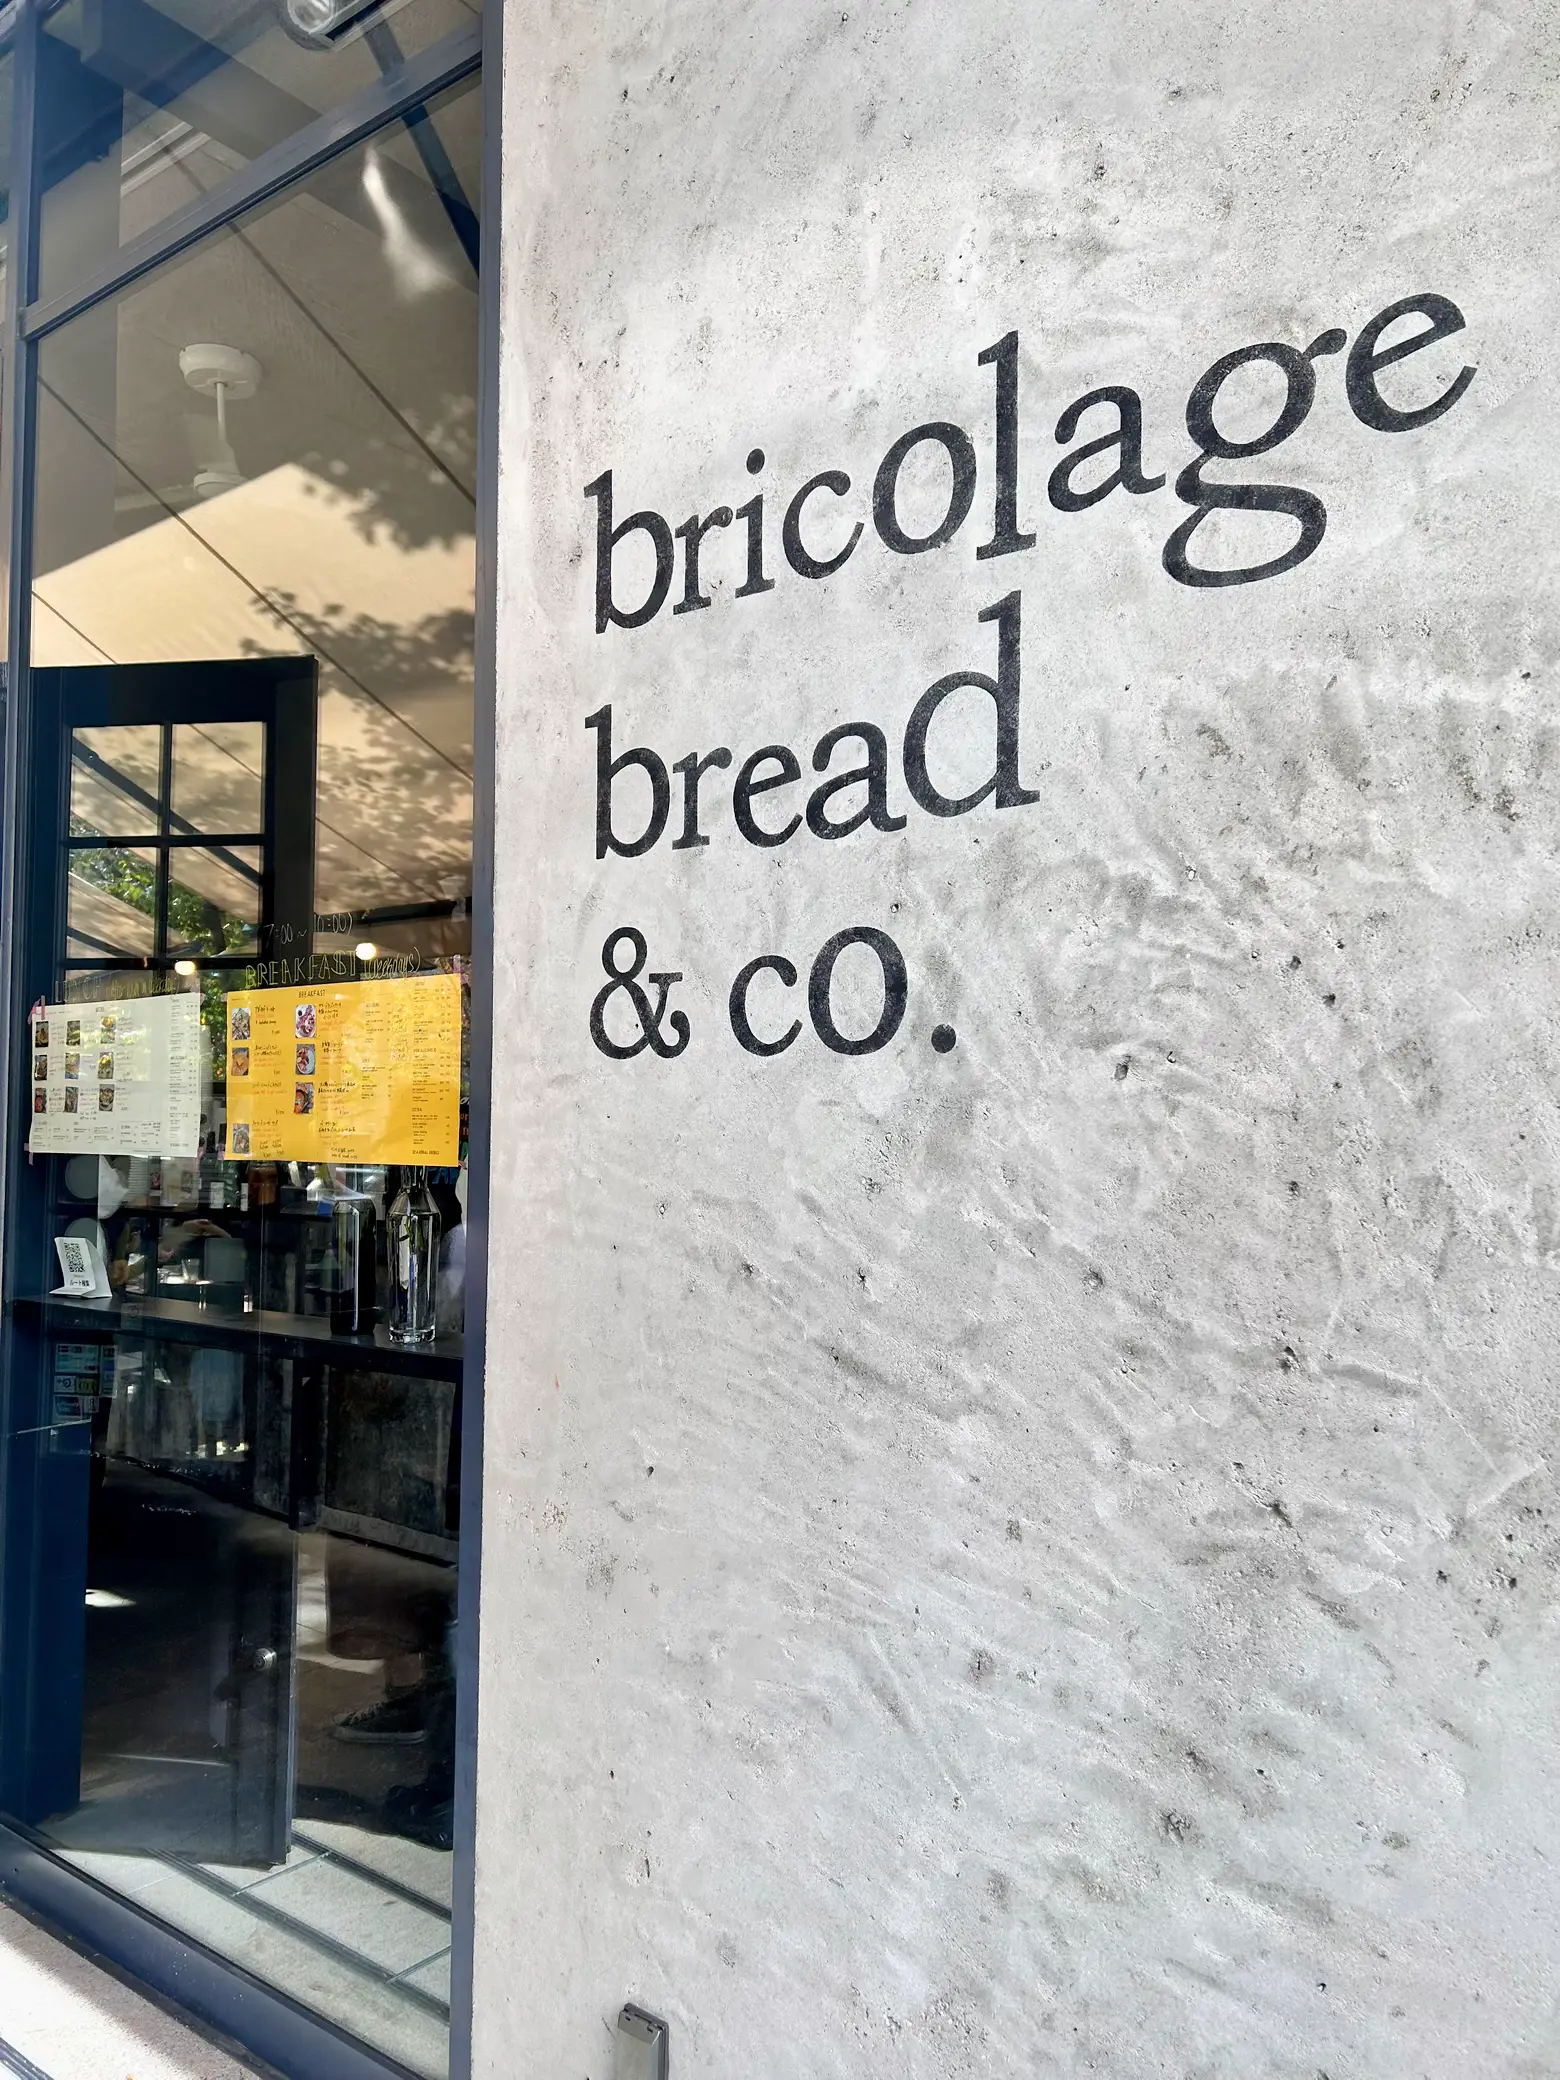 Bricolage Bread & Co  Restaurants in Roppongi, Tokyo